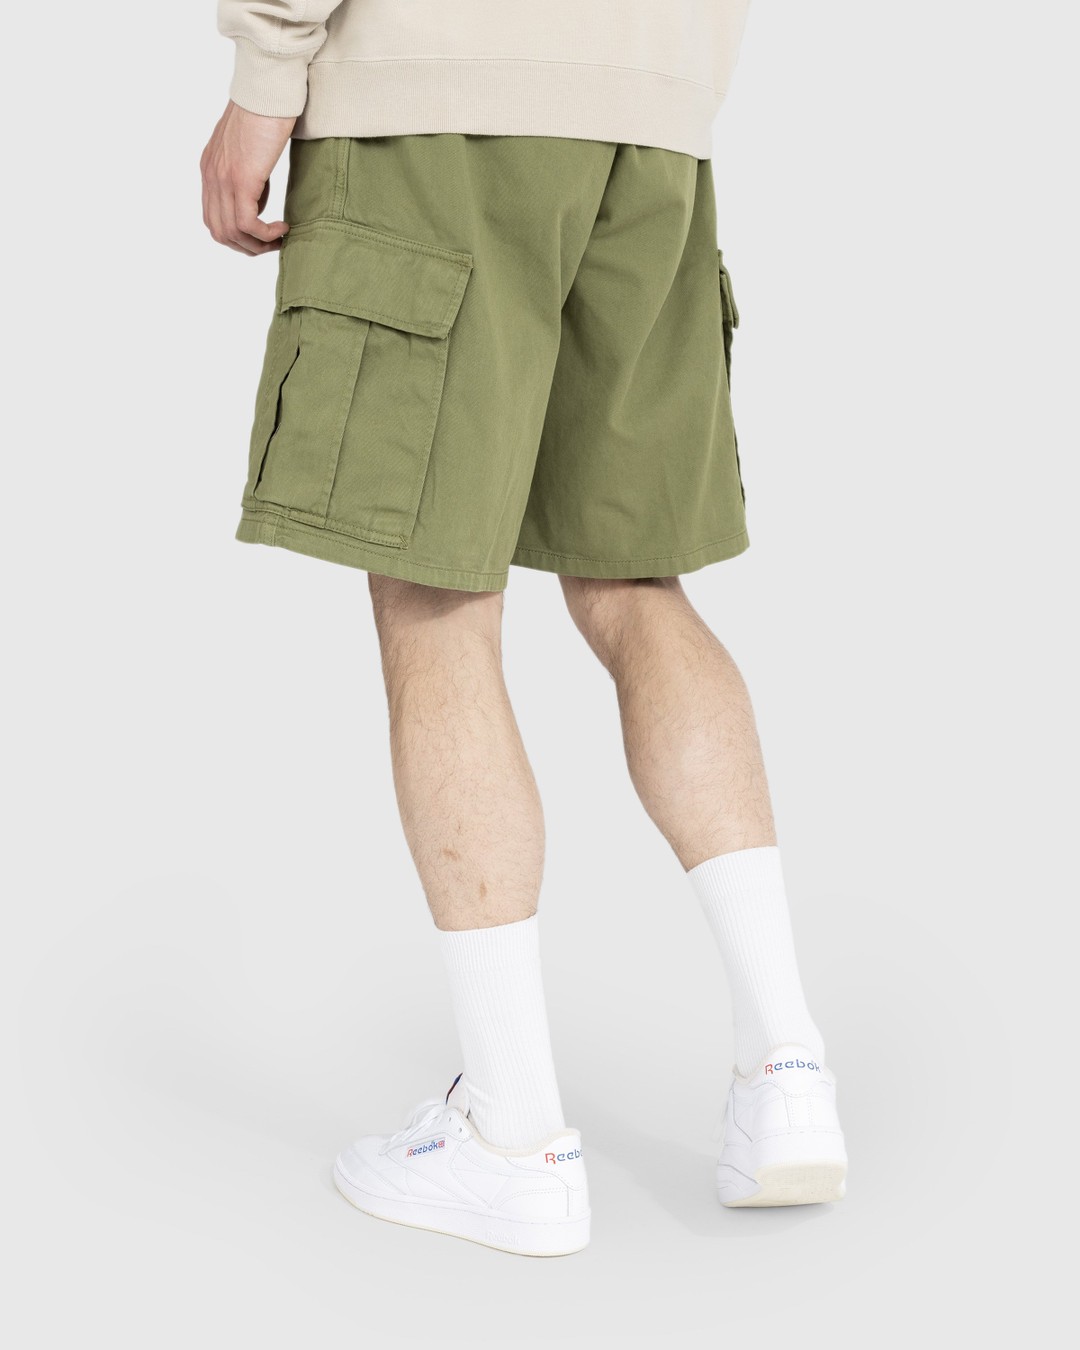 Carhartt WIP – Cole Cargo Short Green - Shorts - Green - Image 3